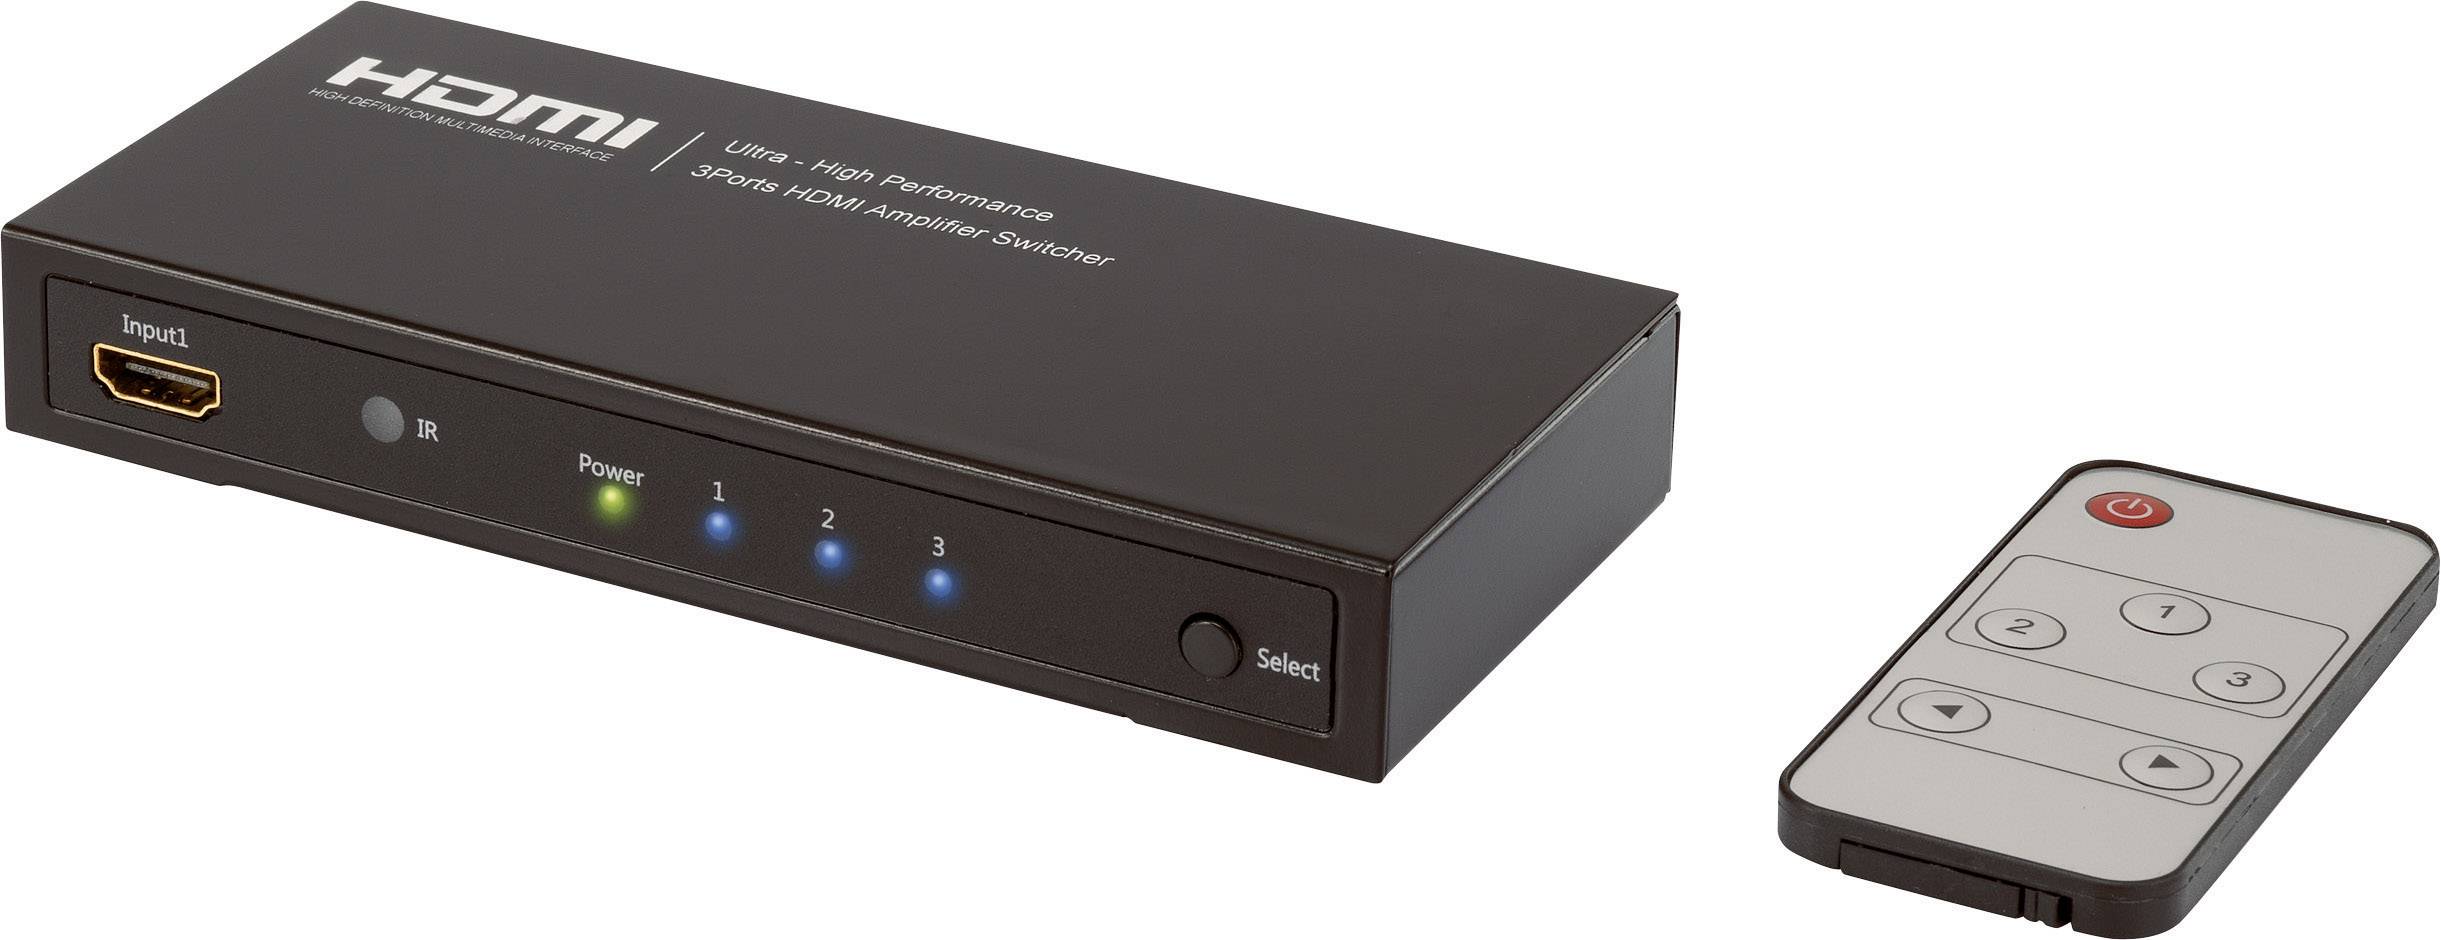 SpeaKa Professional 1000177 3 ports HDMI switch + remote control, 3D ...